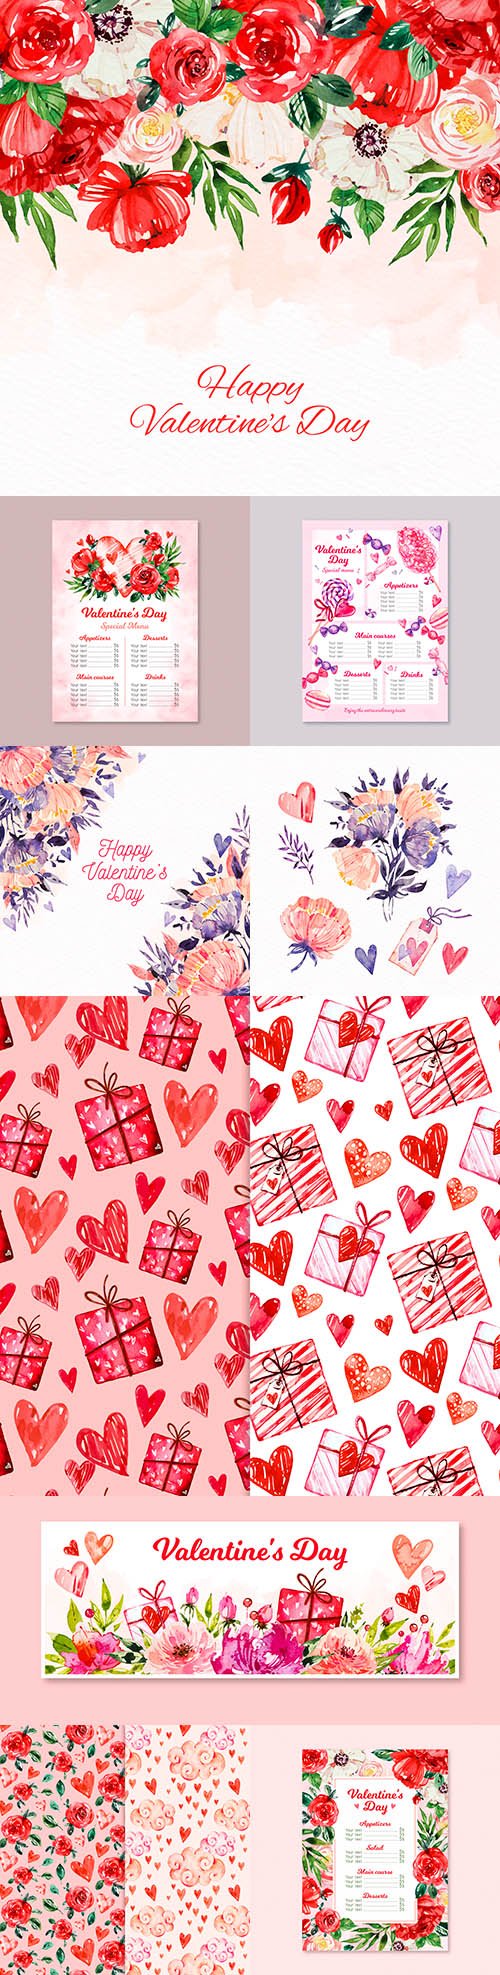 Happy Valentine's Day romantic decorative illustrations 42